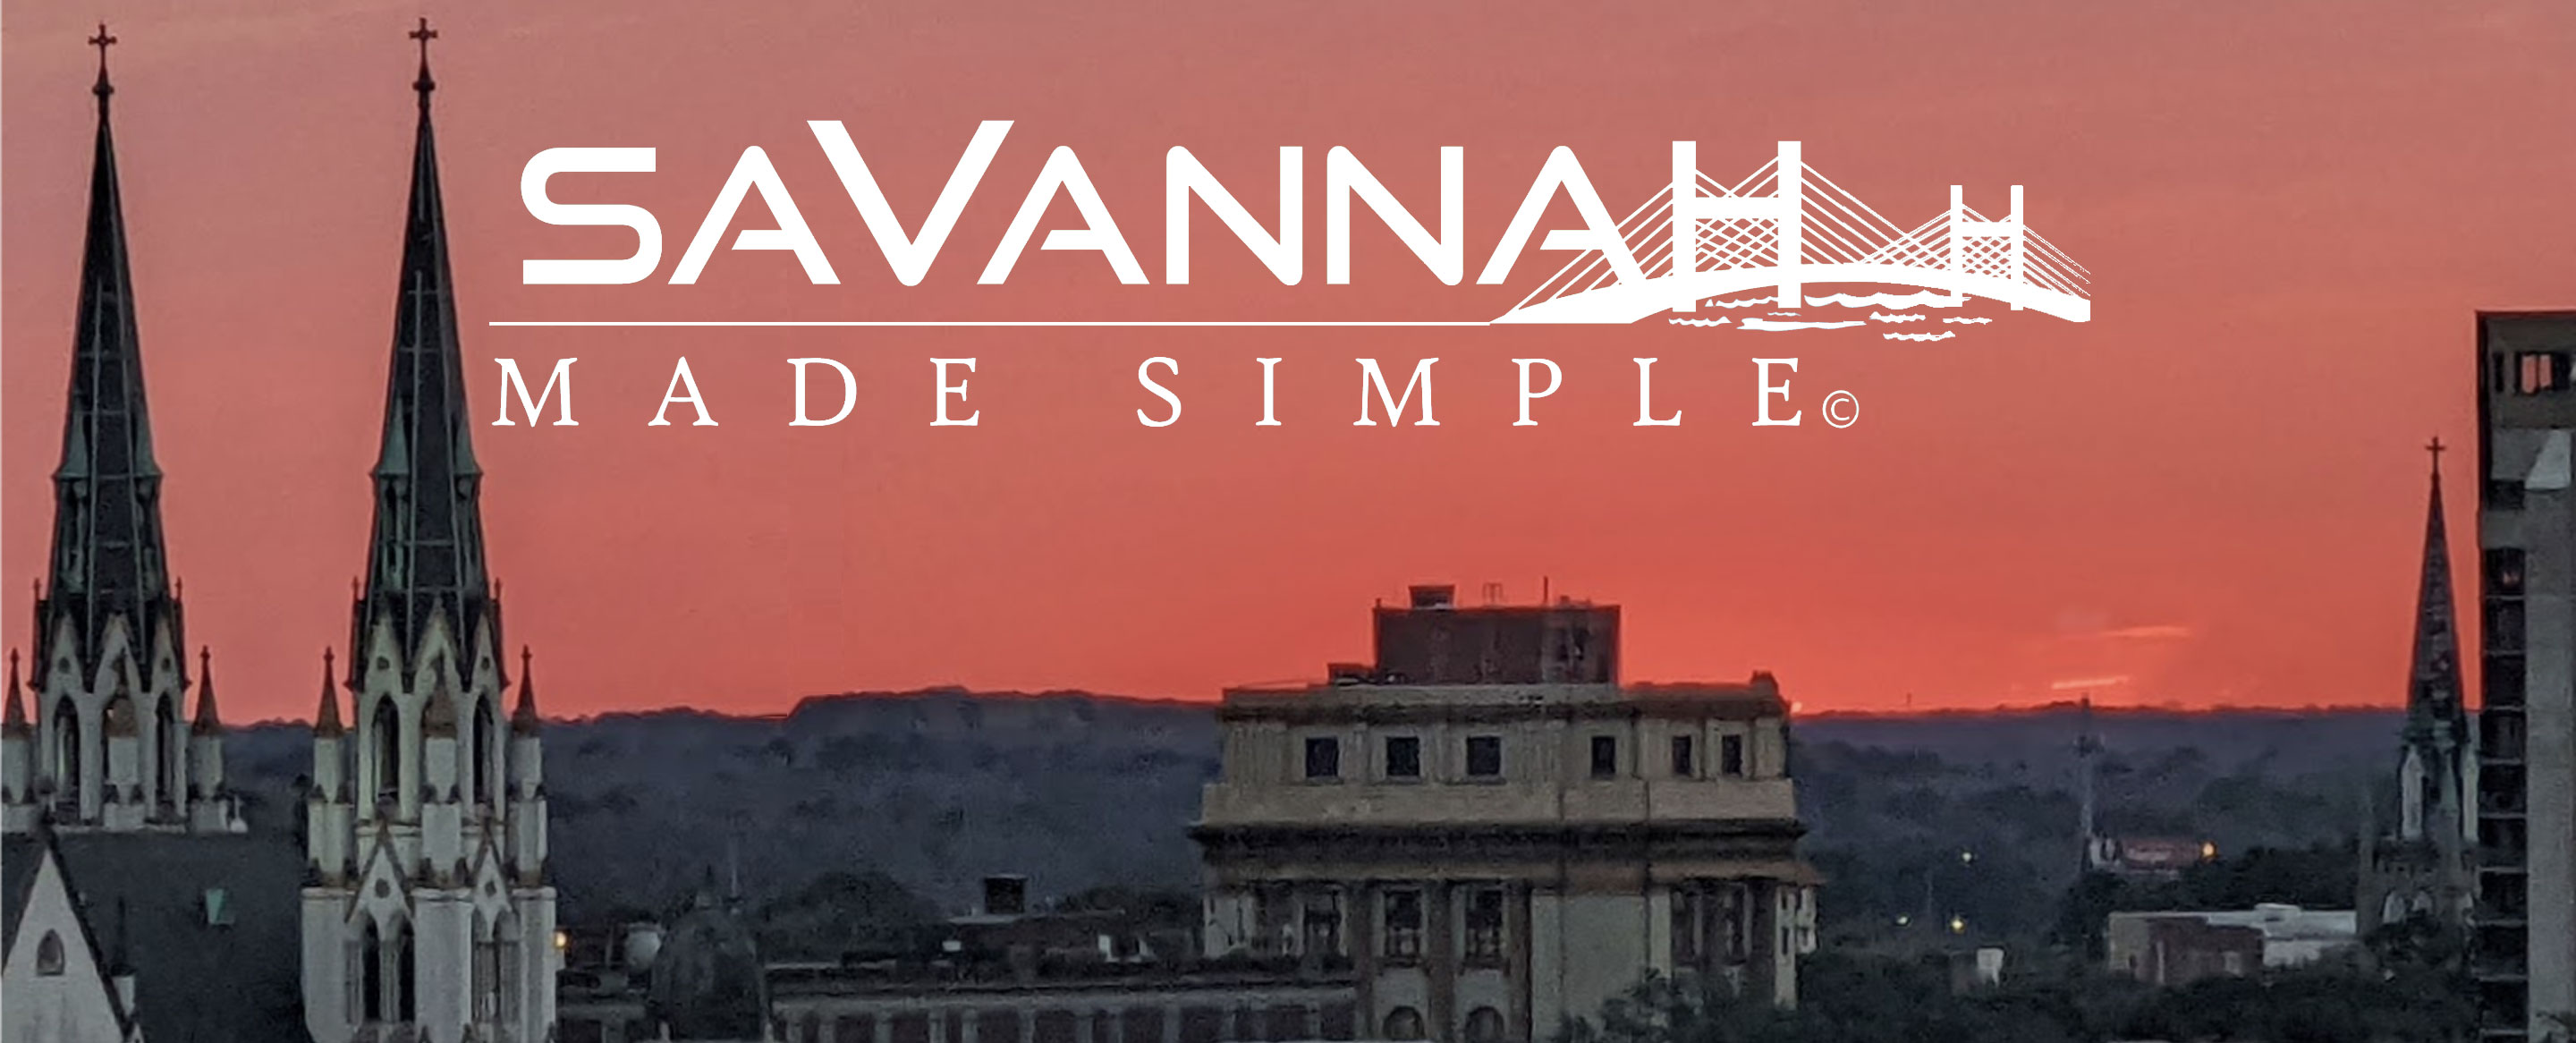 savannah-made-simple